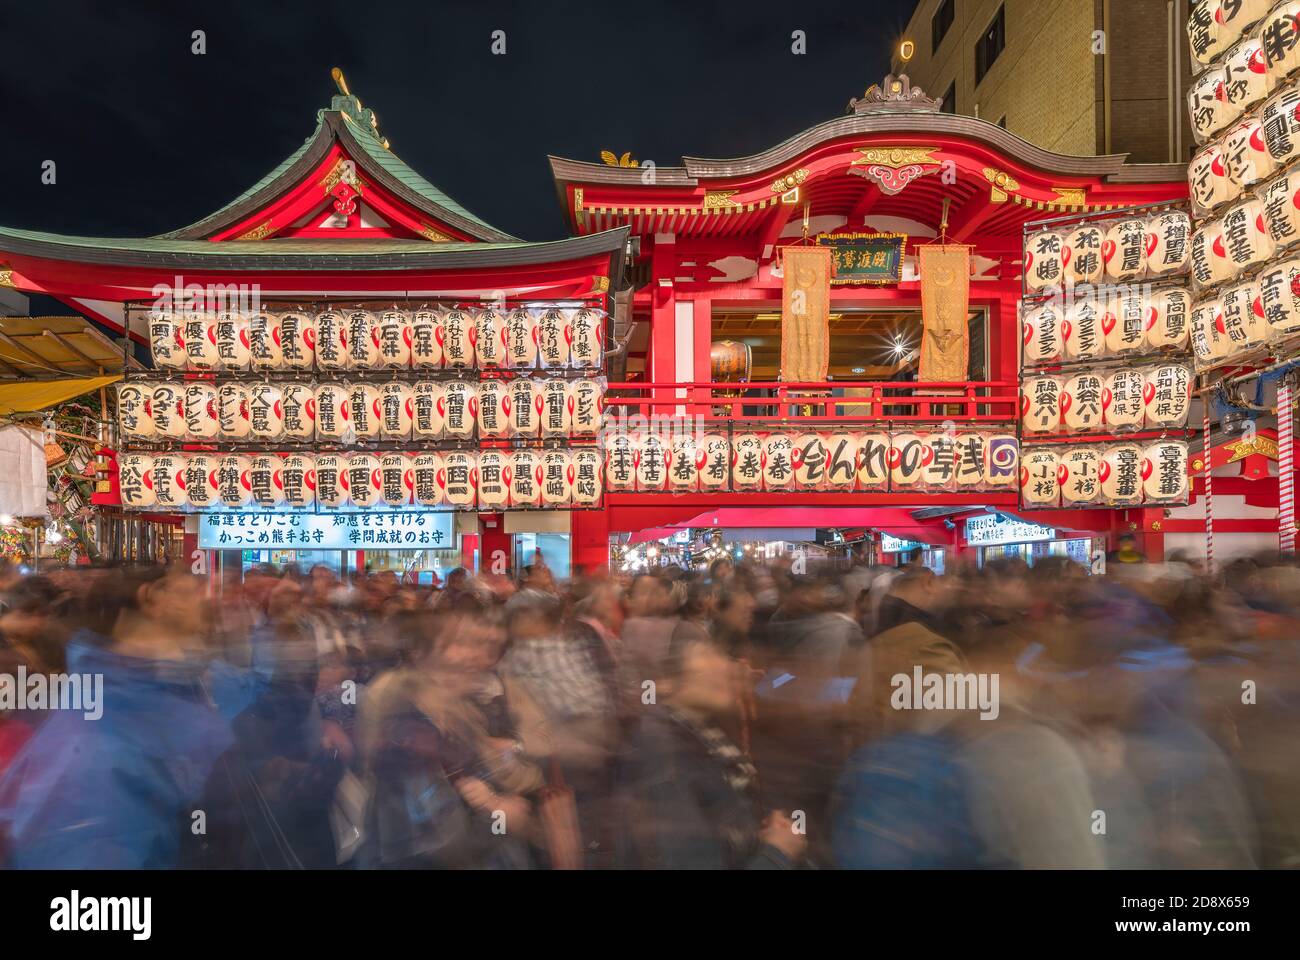 asakusa, japan - november 08 2019: Gakudou platform used for kagura dance overlooked by a curved Karahafu roof ornated of luminous japanese paper lant Stock Photo